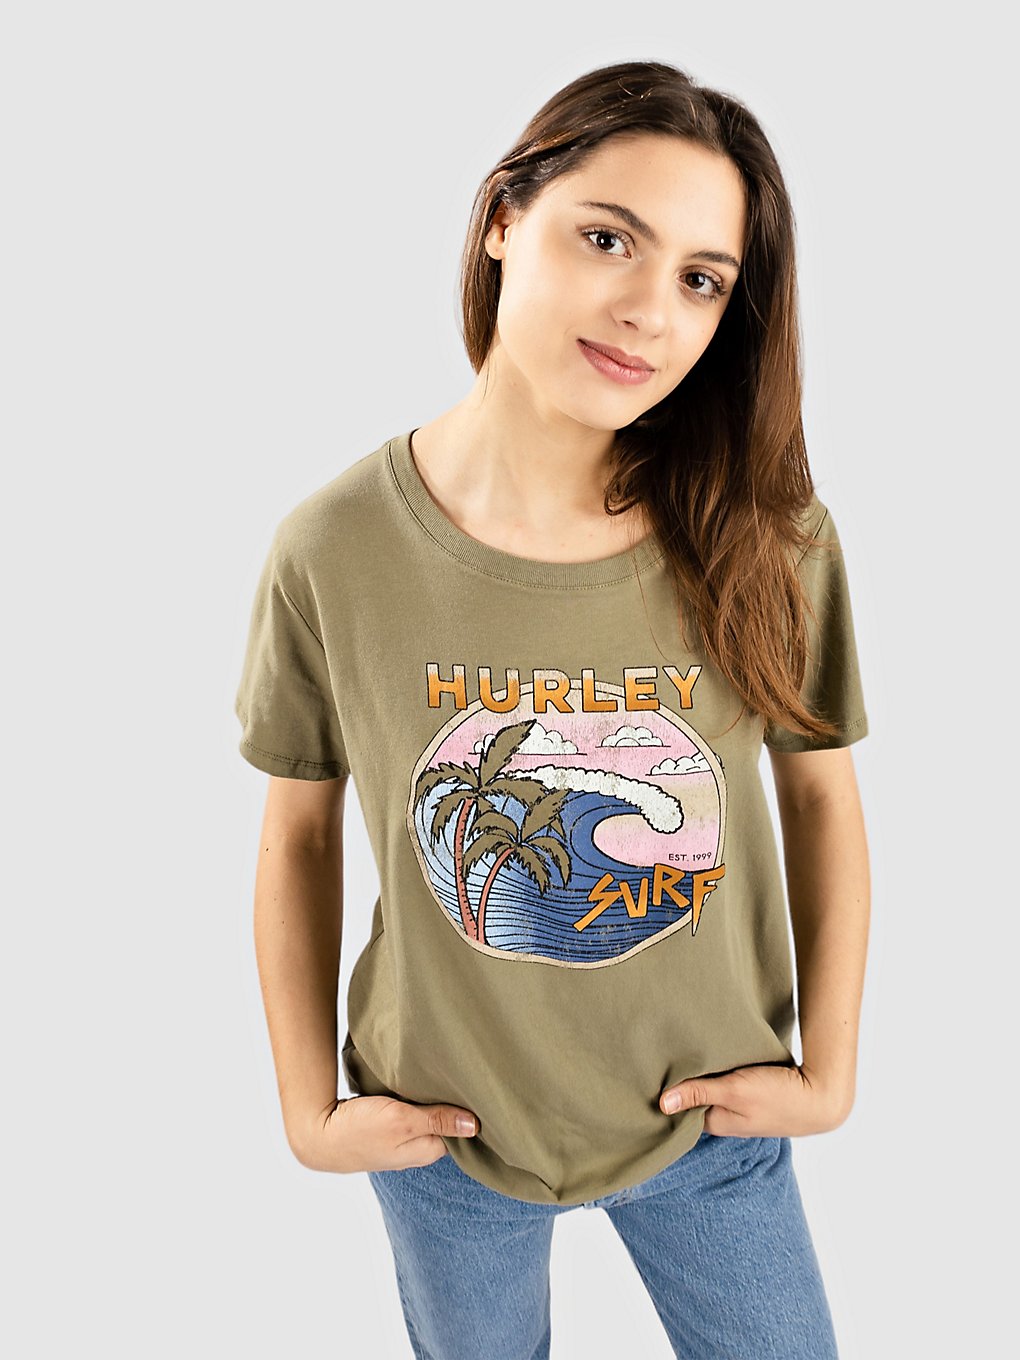 Hurley Surf Classic T-Shirt groen